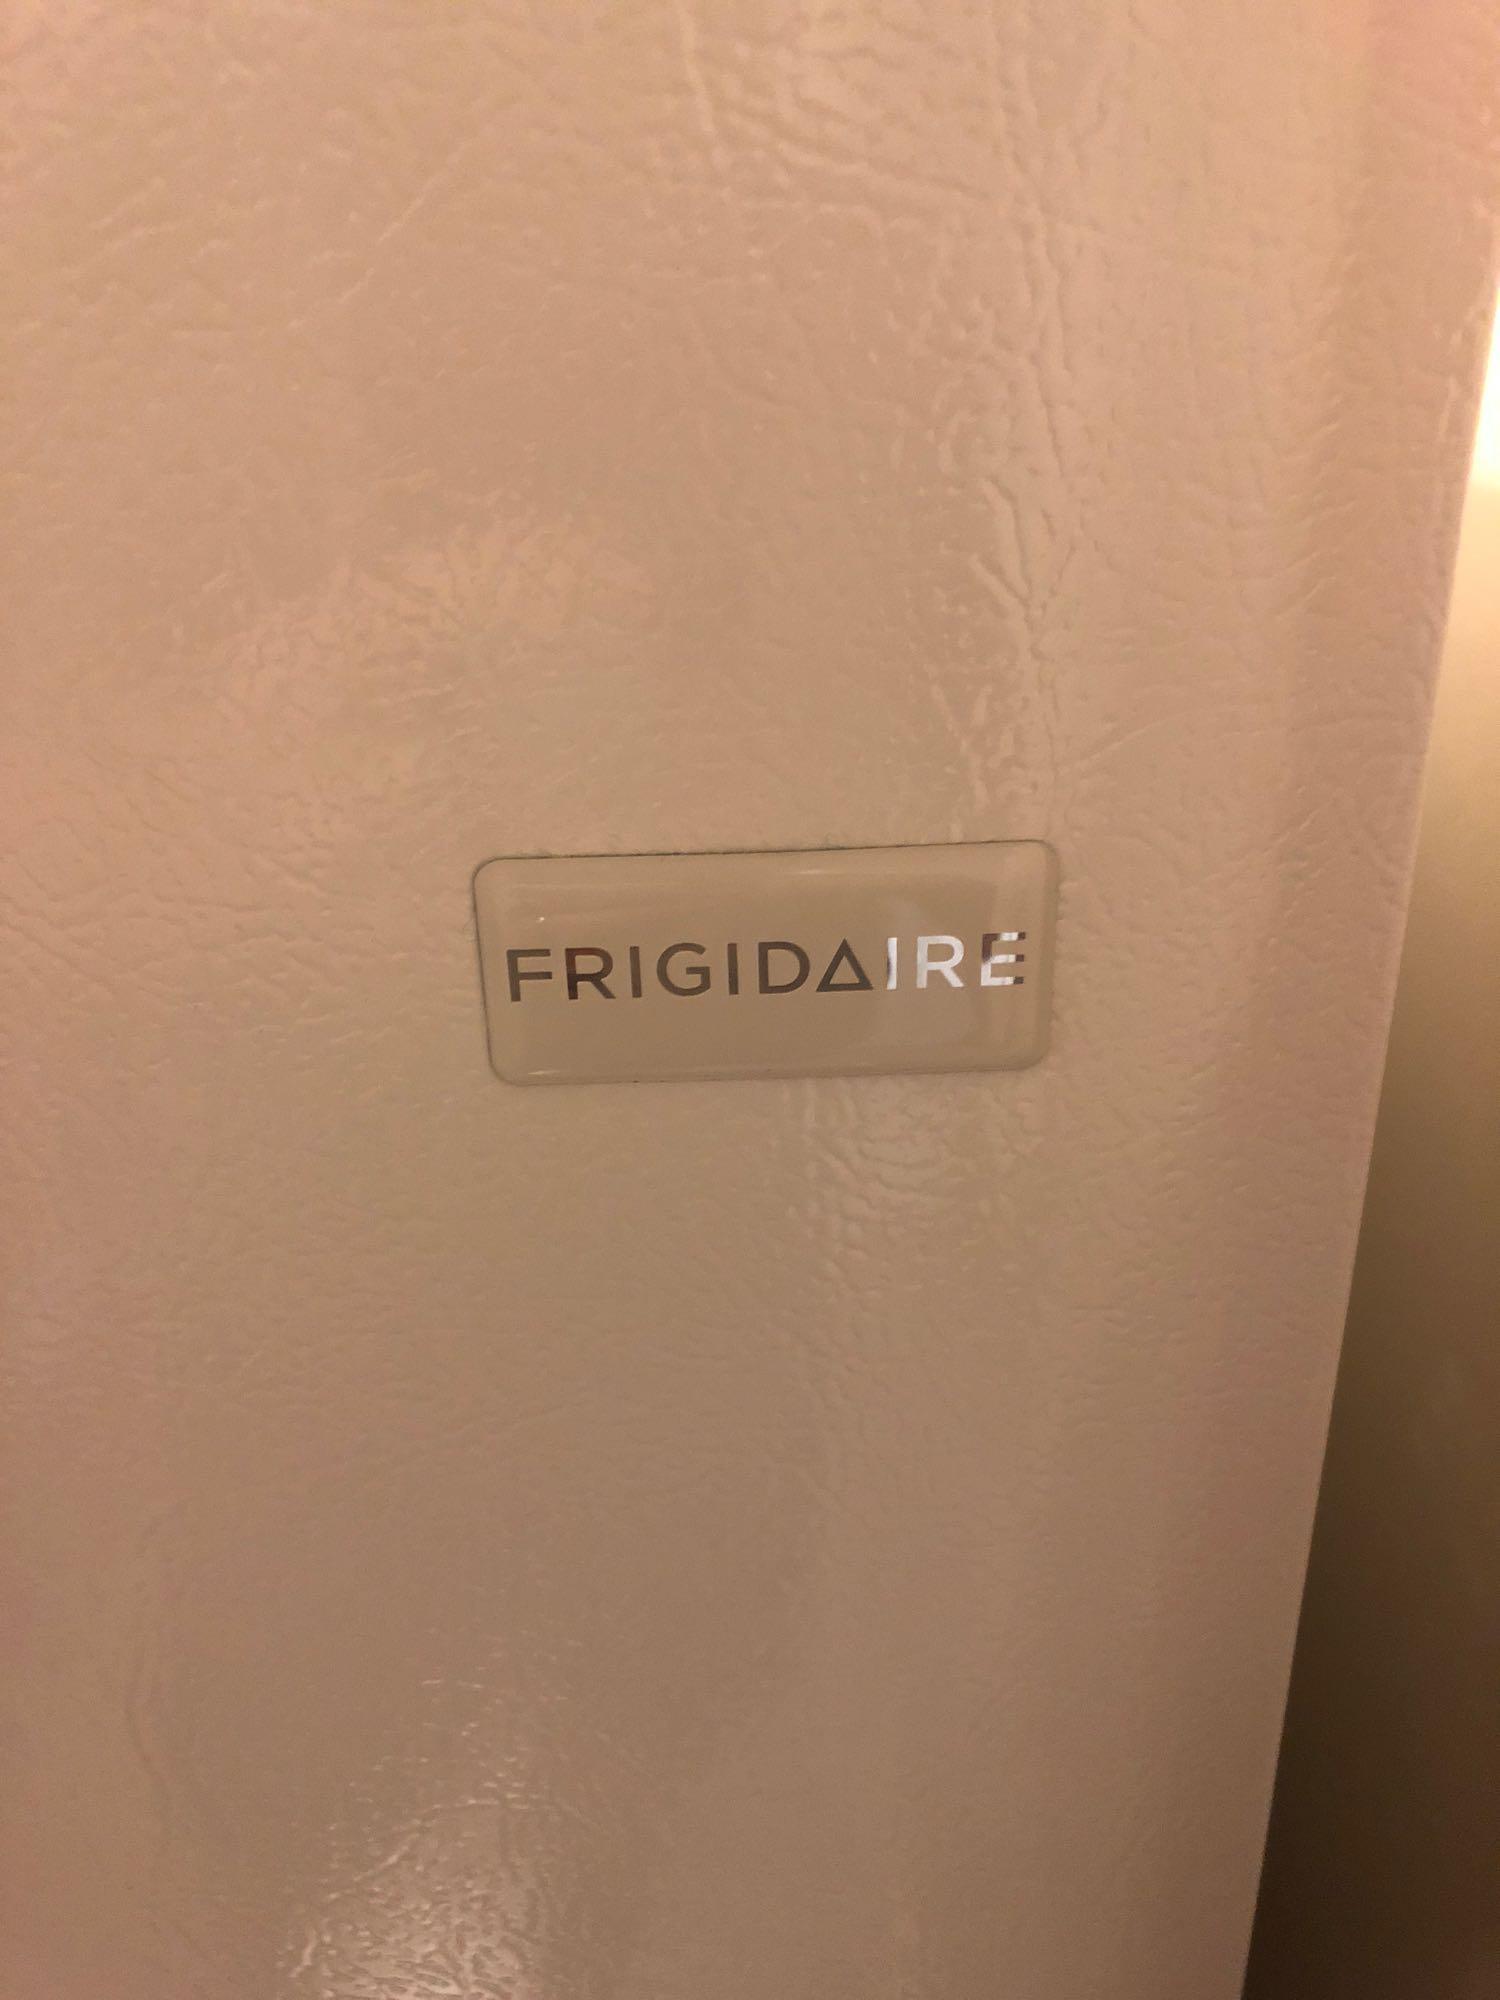 FRIDGADAIRE upright freezer(model LFFU14F5HWS)(contents not included)